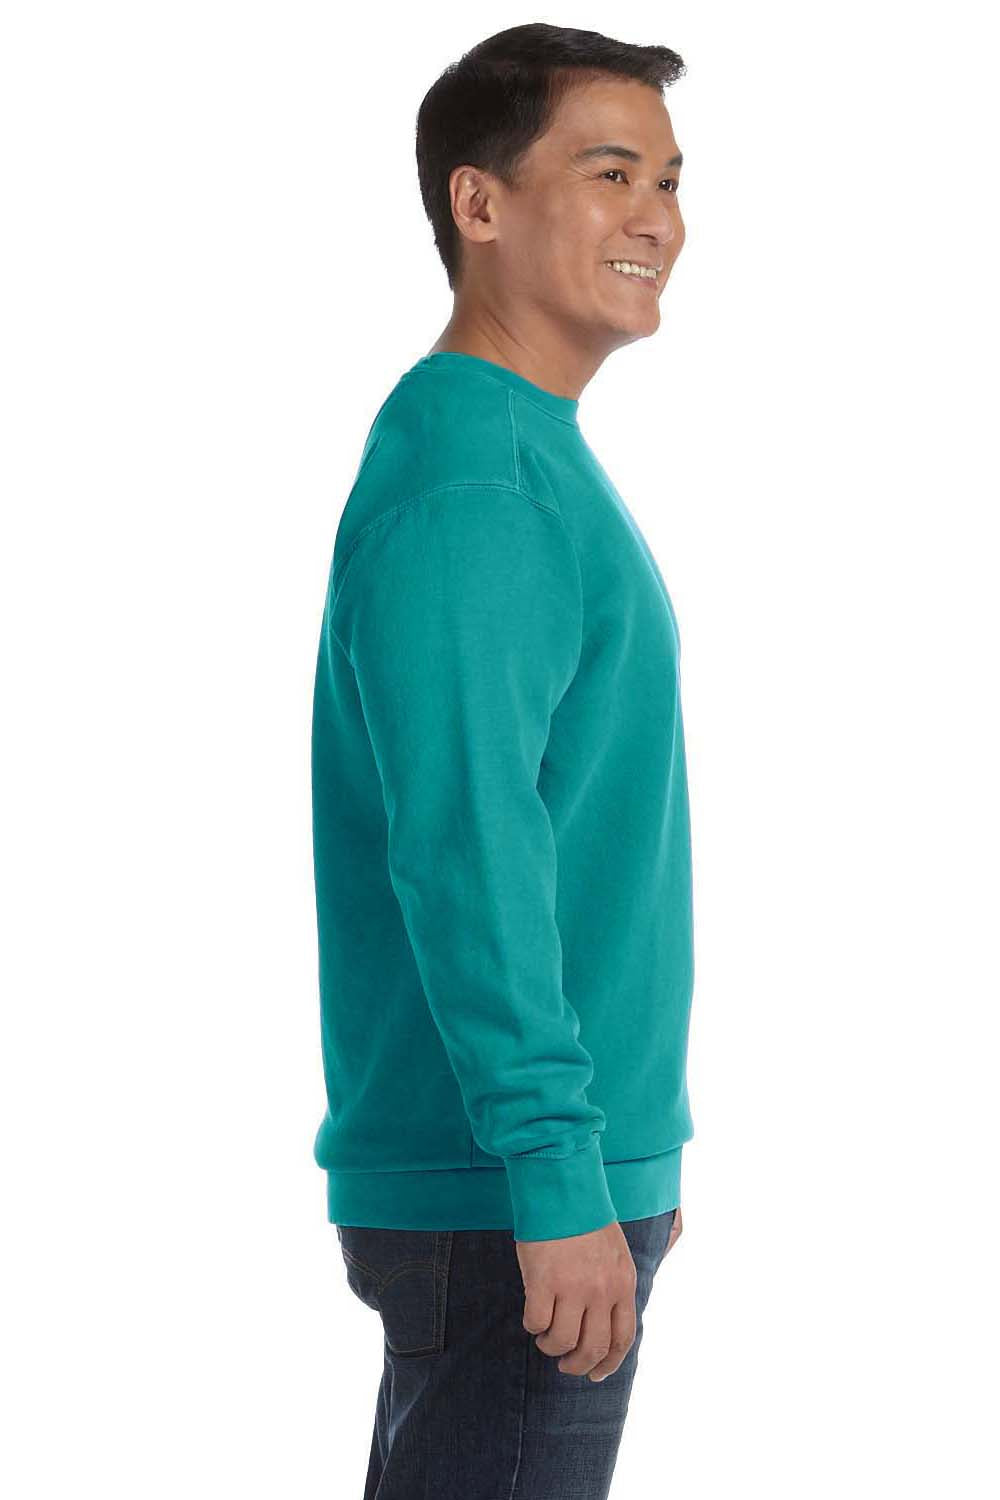 Comfort Colors 1566 Mens Crewneck Sweatshirt Seafoam Green Side